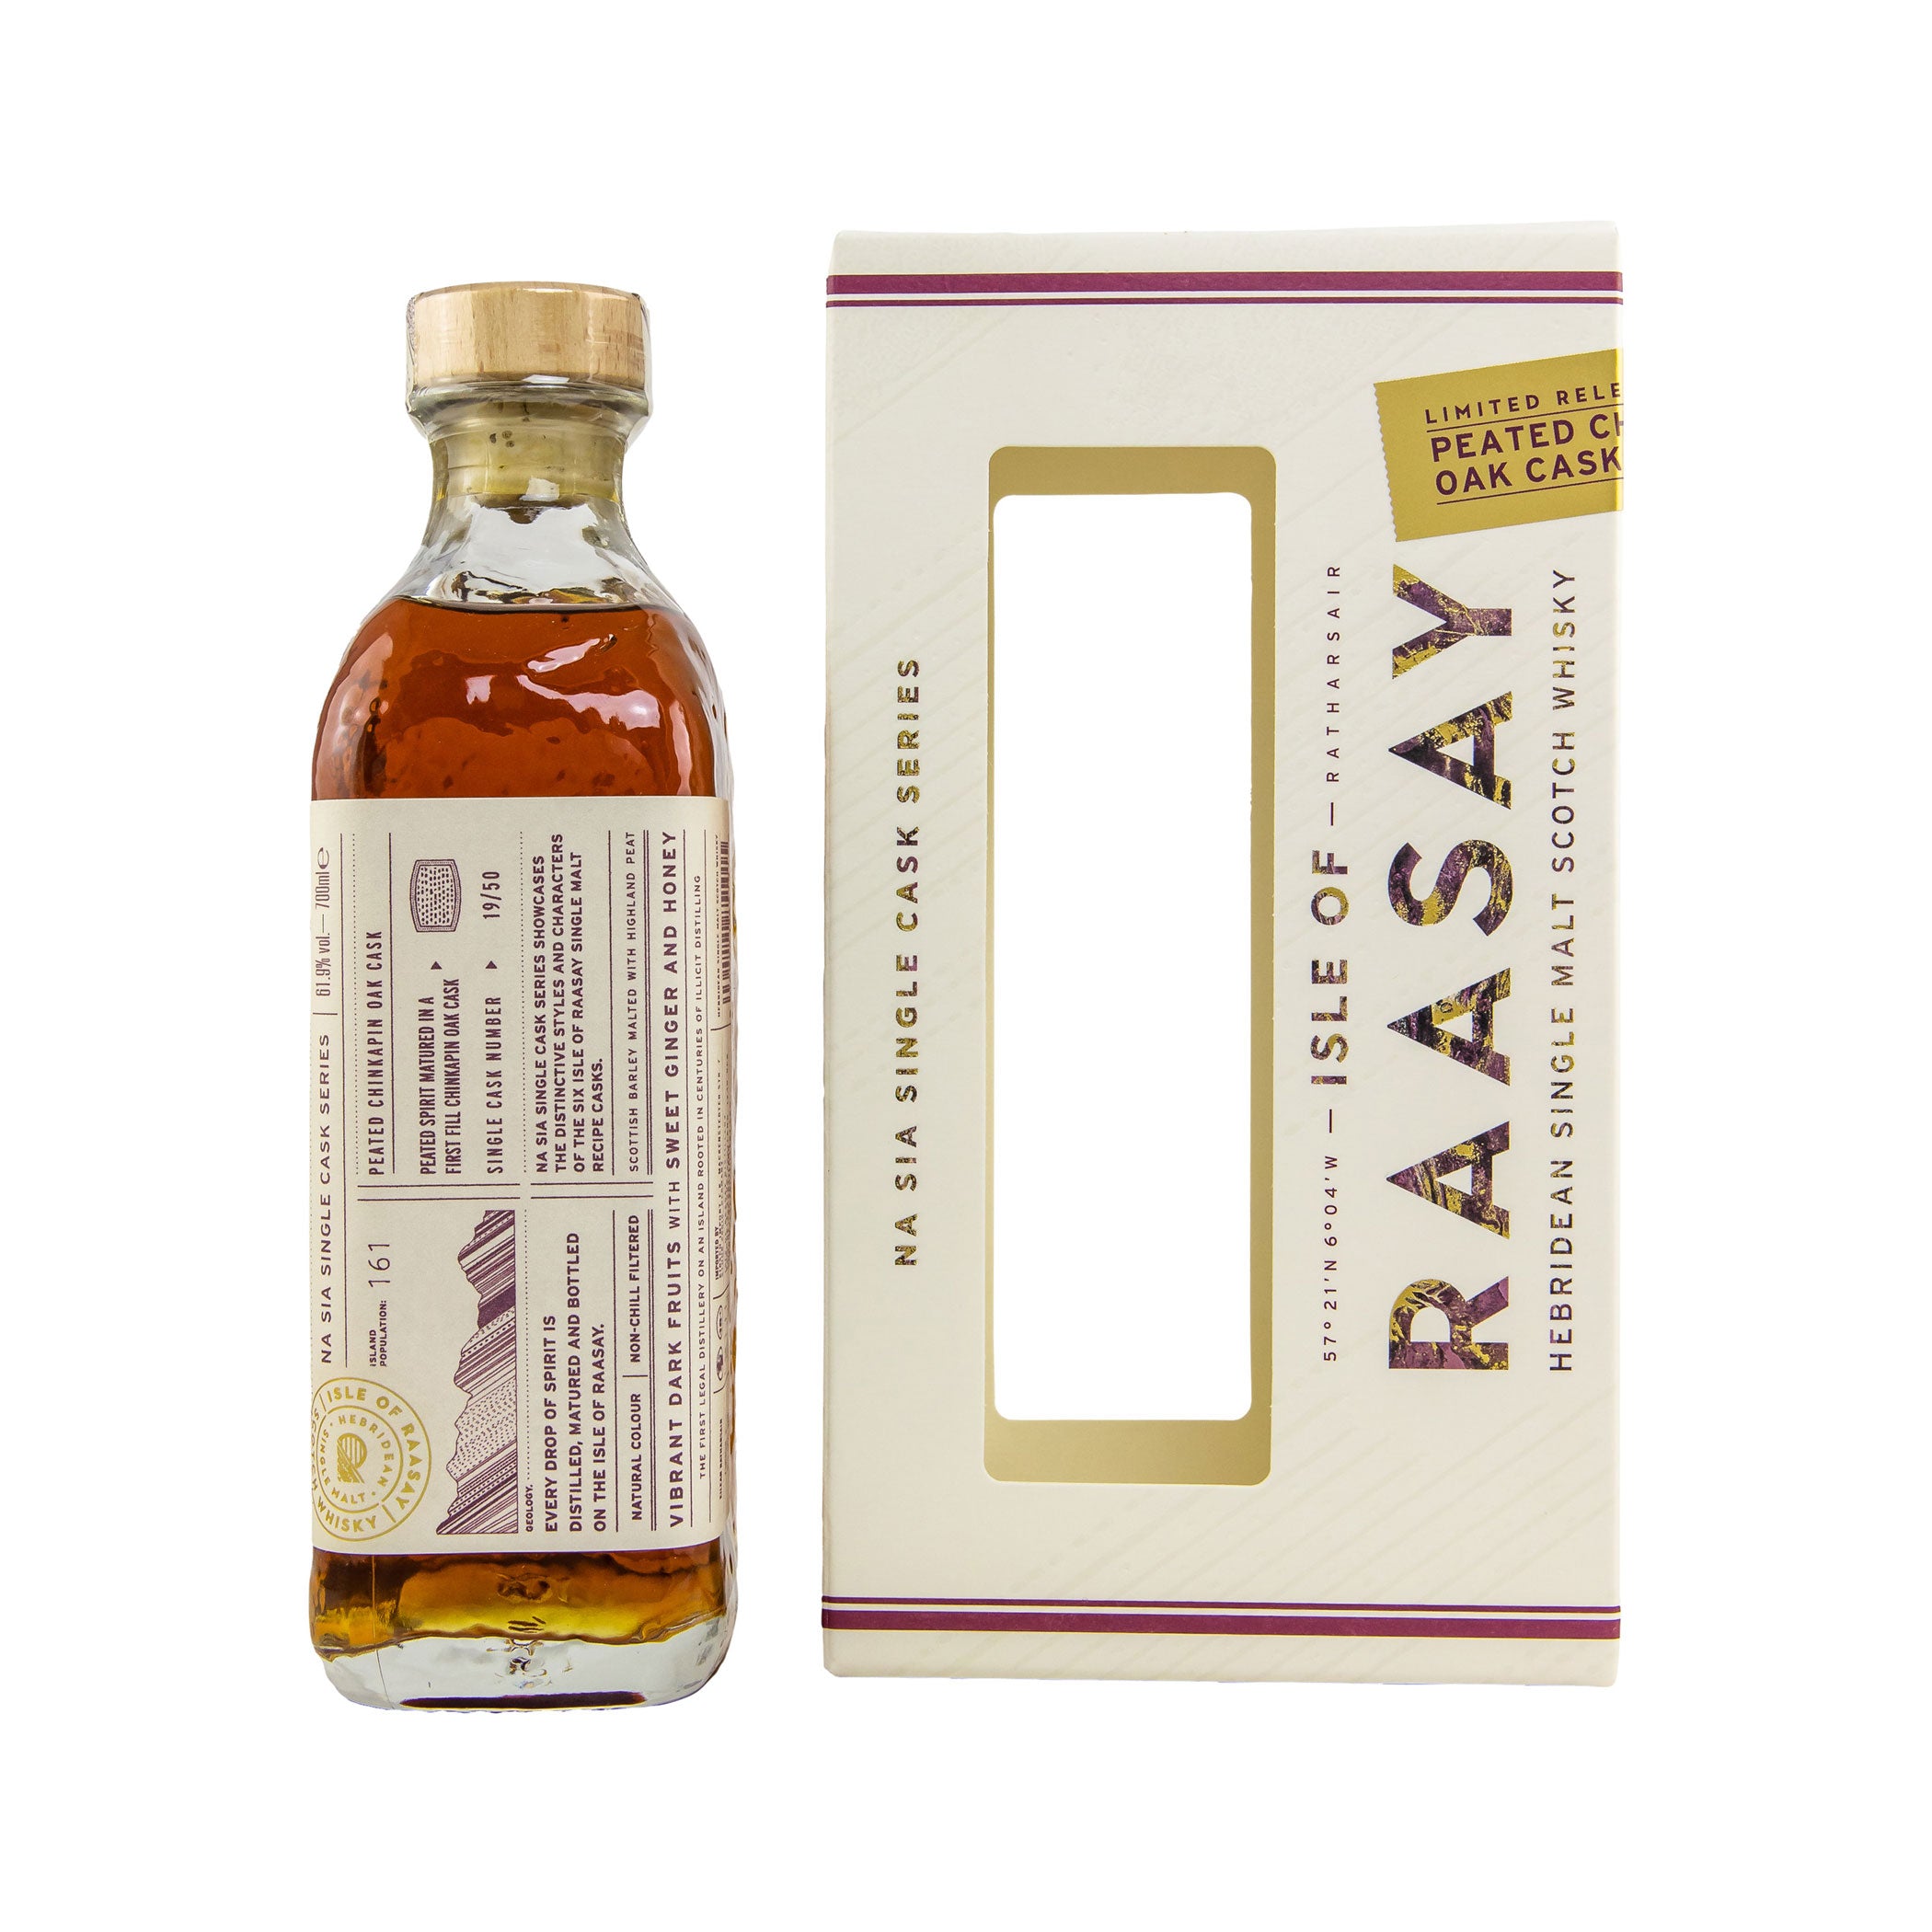 Isle of Raasay Peated Chinkapin Oak Cask - Hebridean Single Malt Scotch Whisky - Na Sia Single Cask Series